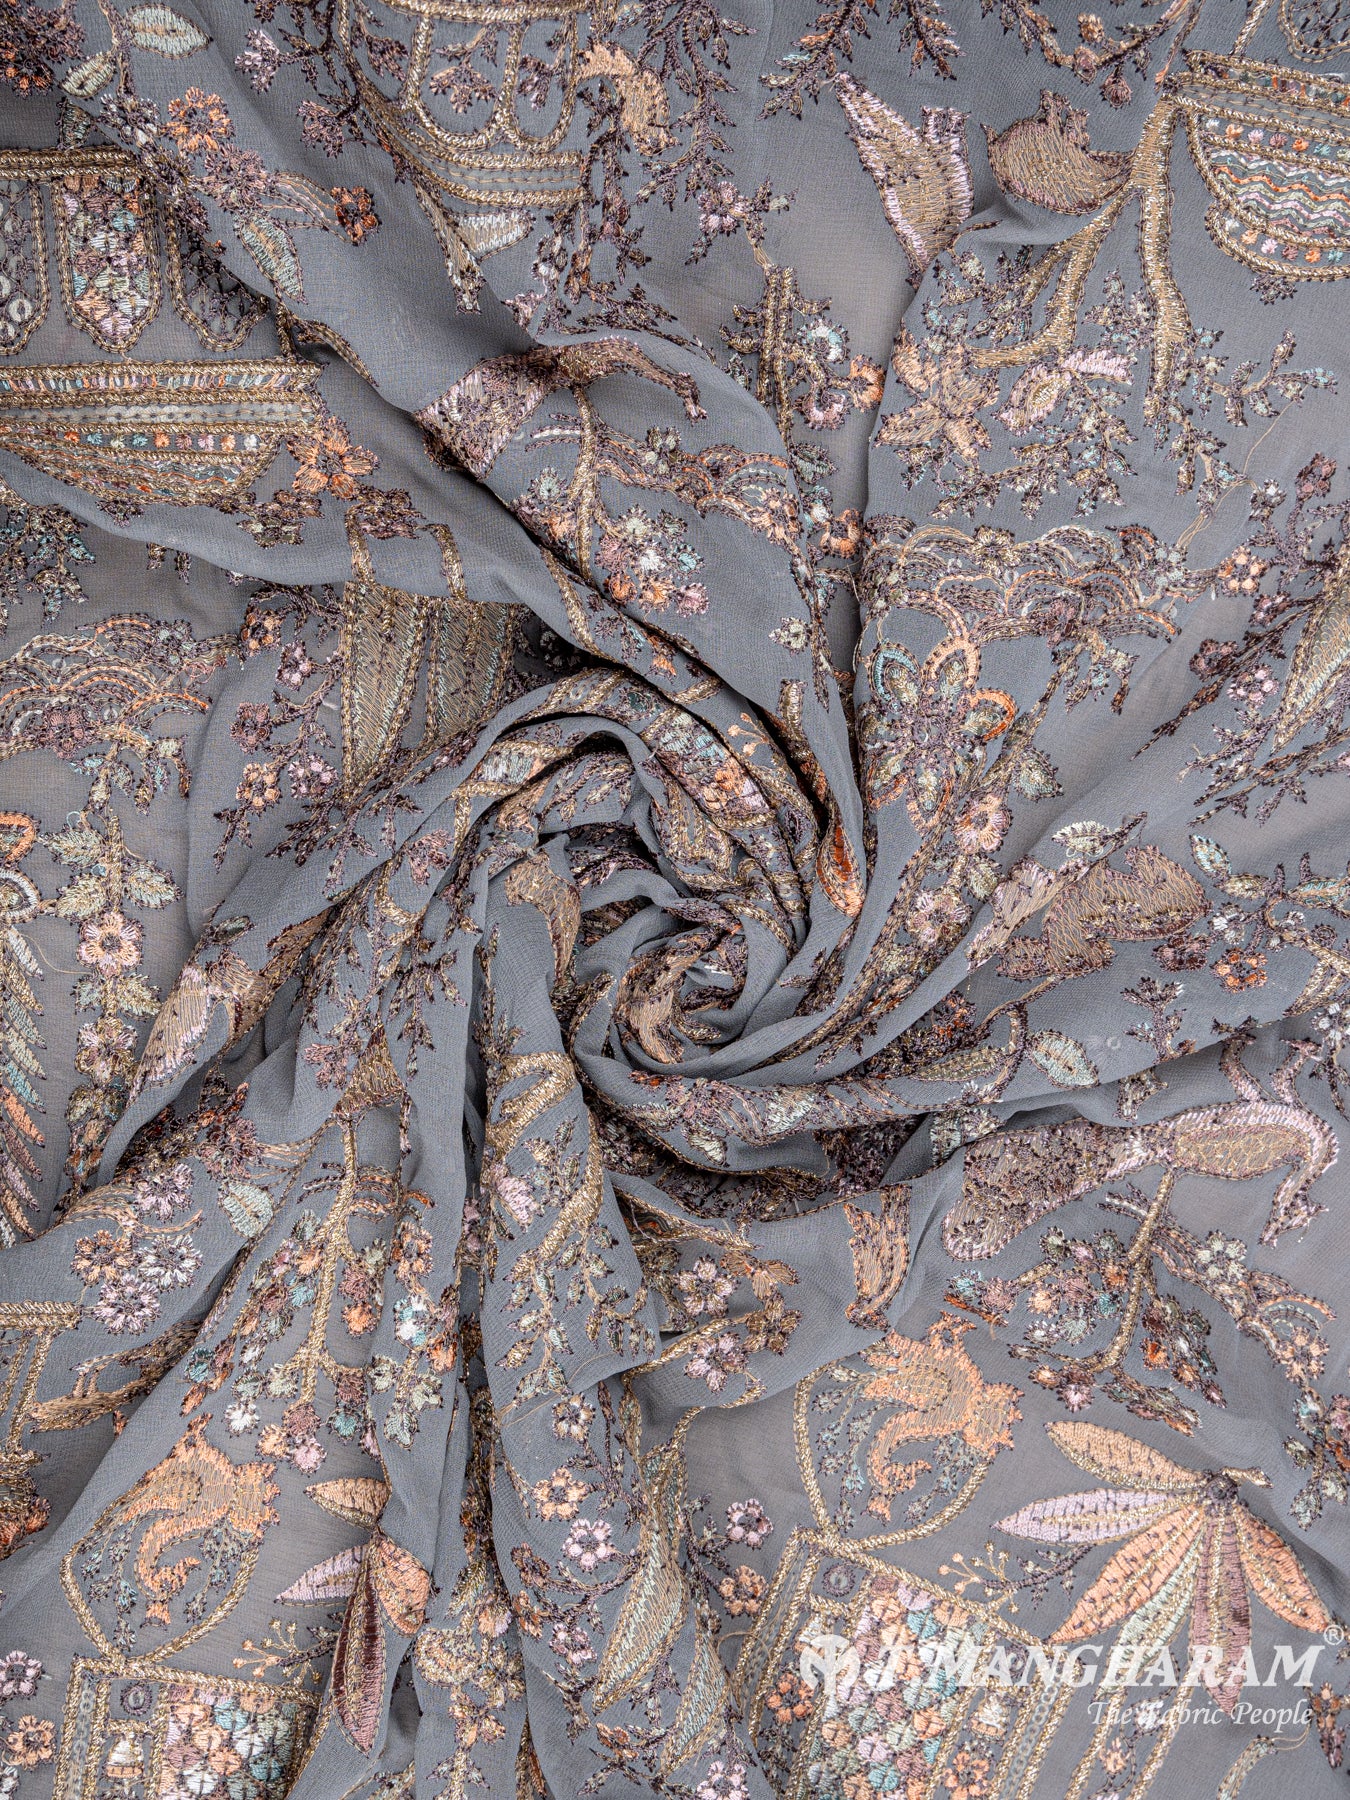 Grey Fancy Net Fabric - EA0498 – Tmangharam - The Fabric People